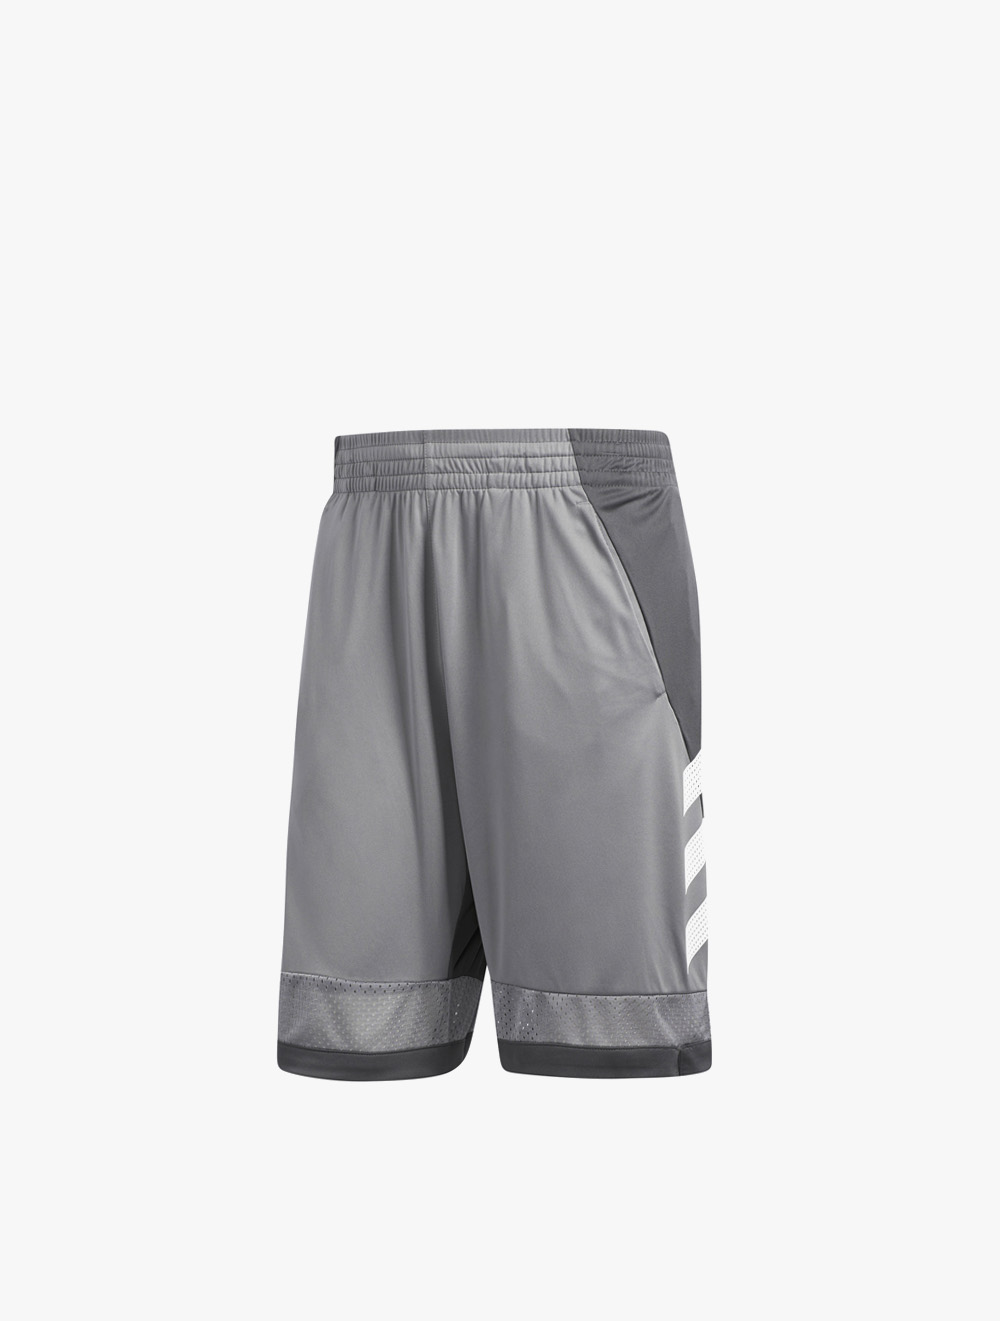 adidas pro bounce basketball shorts